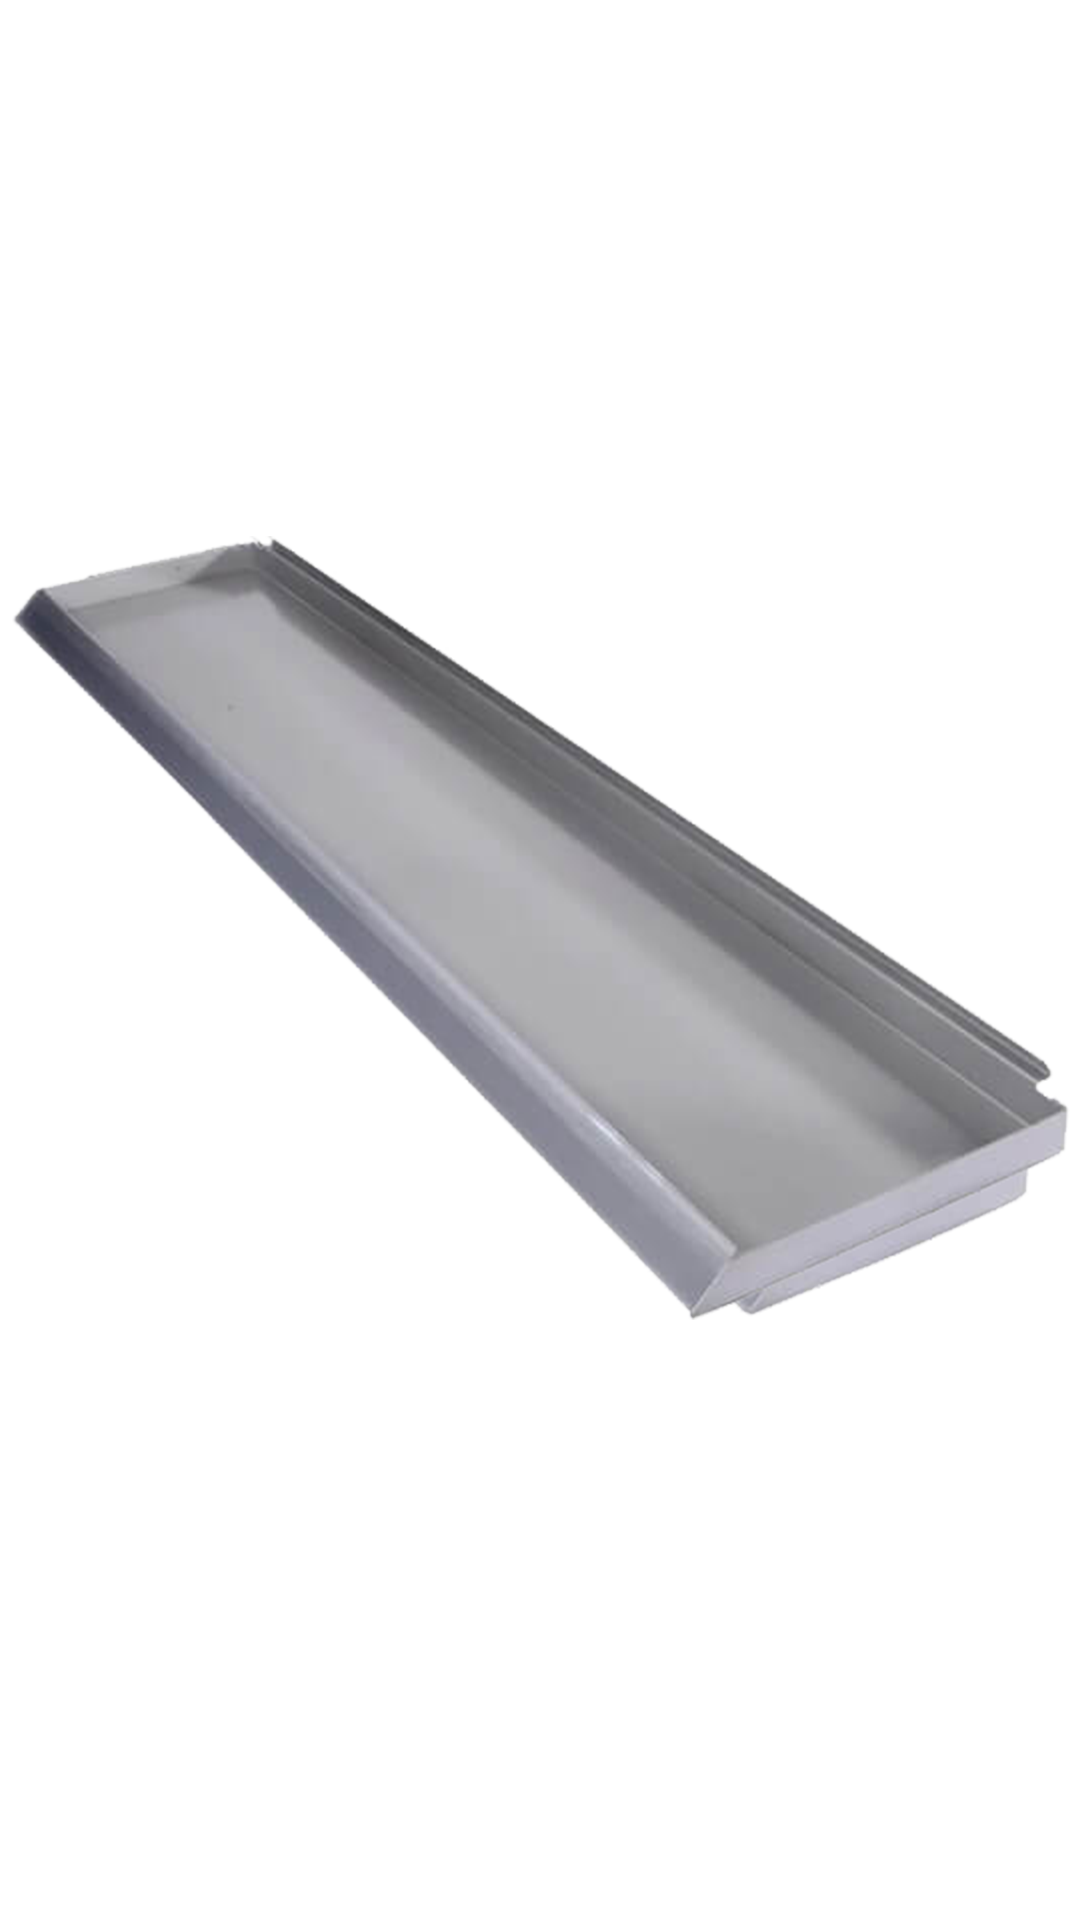 Flat Metal Shelf